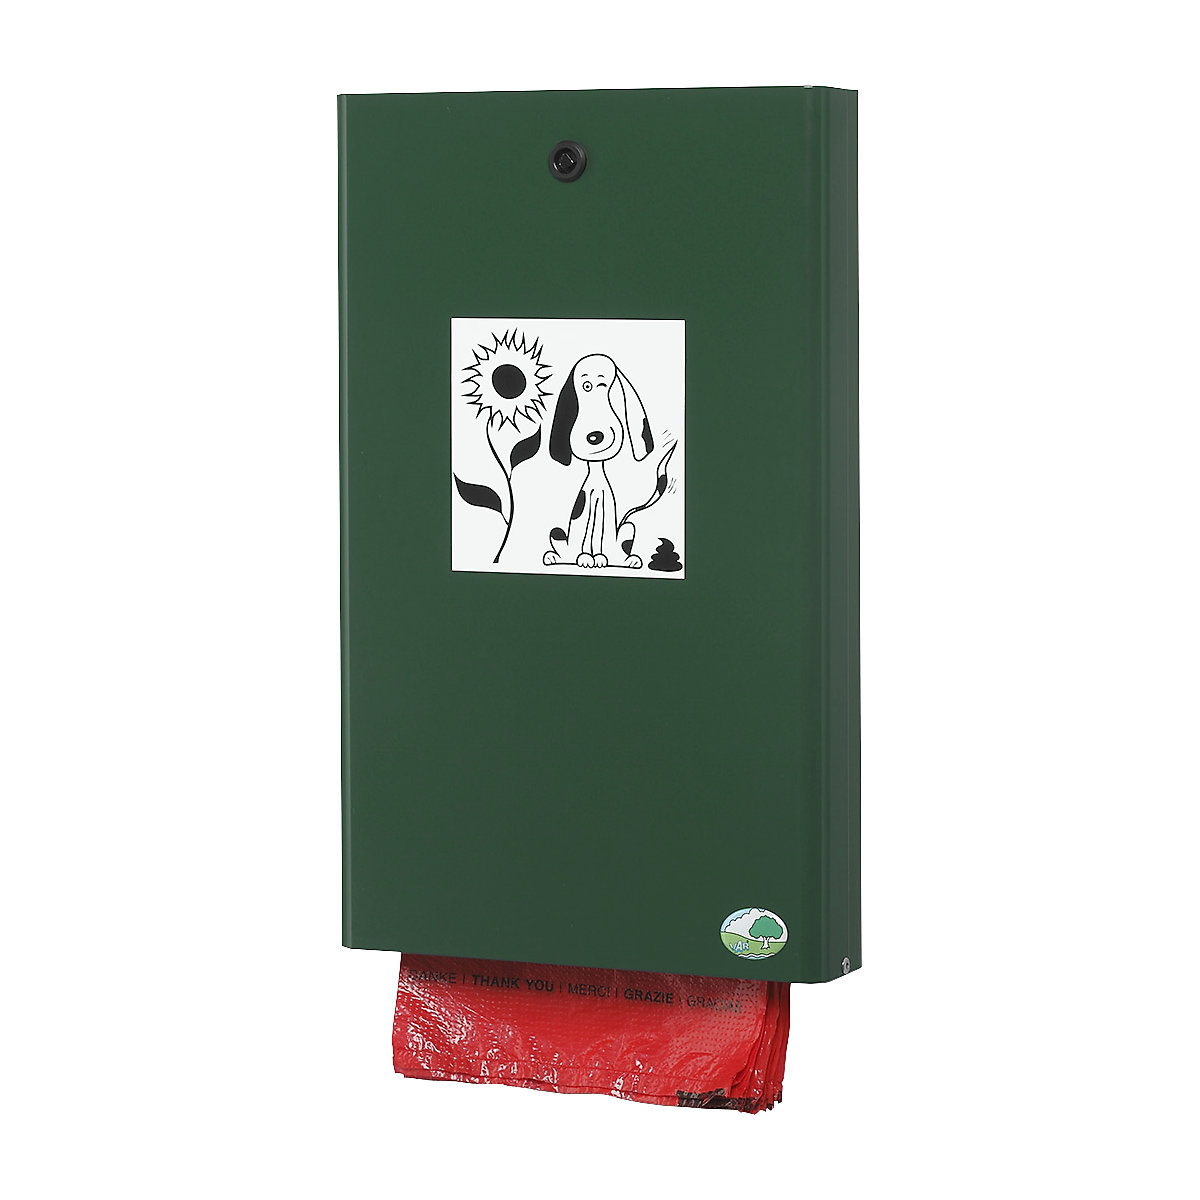 Doggy bag dispenser - VAR